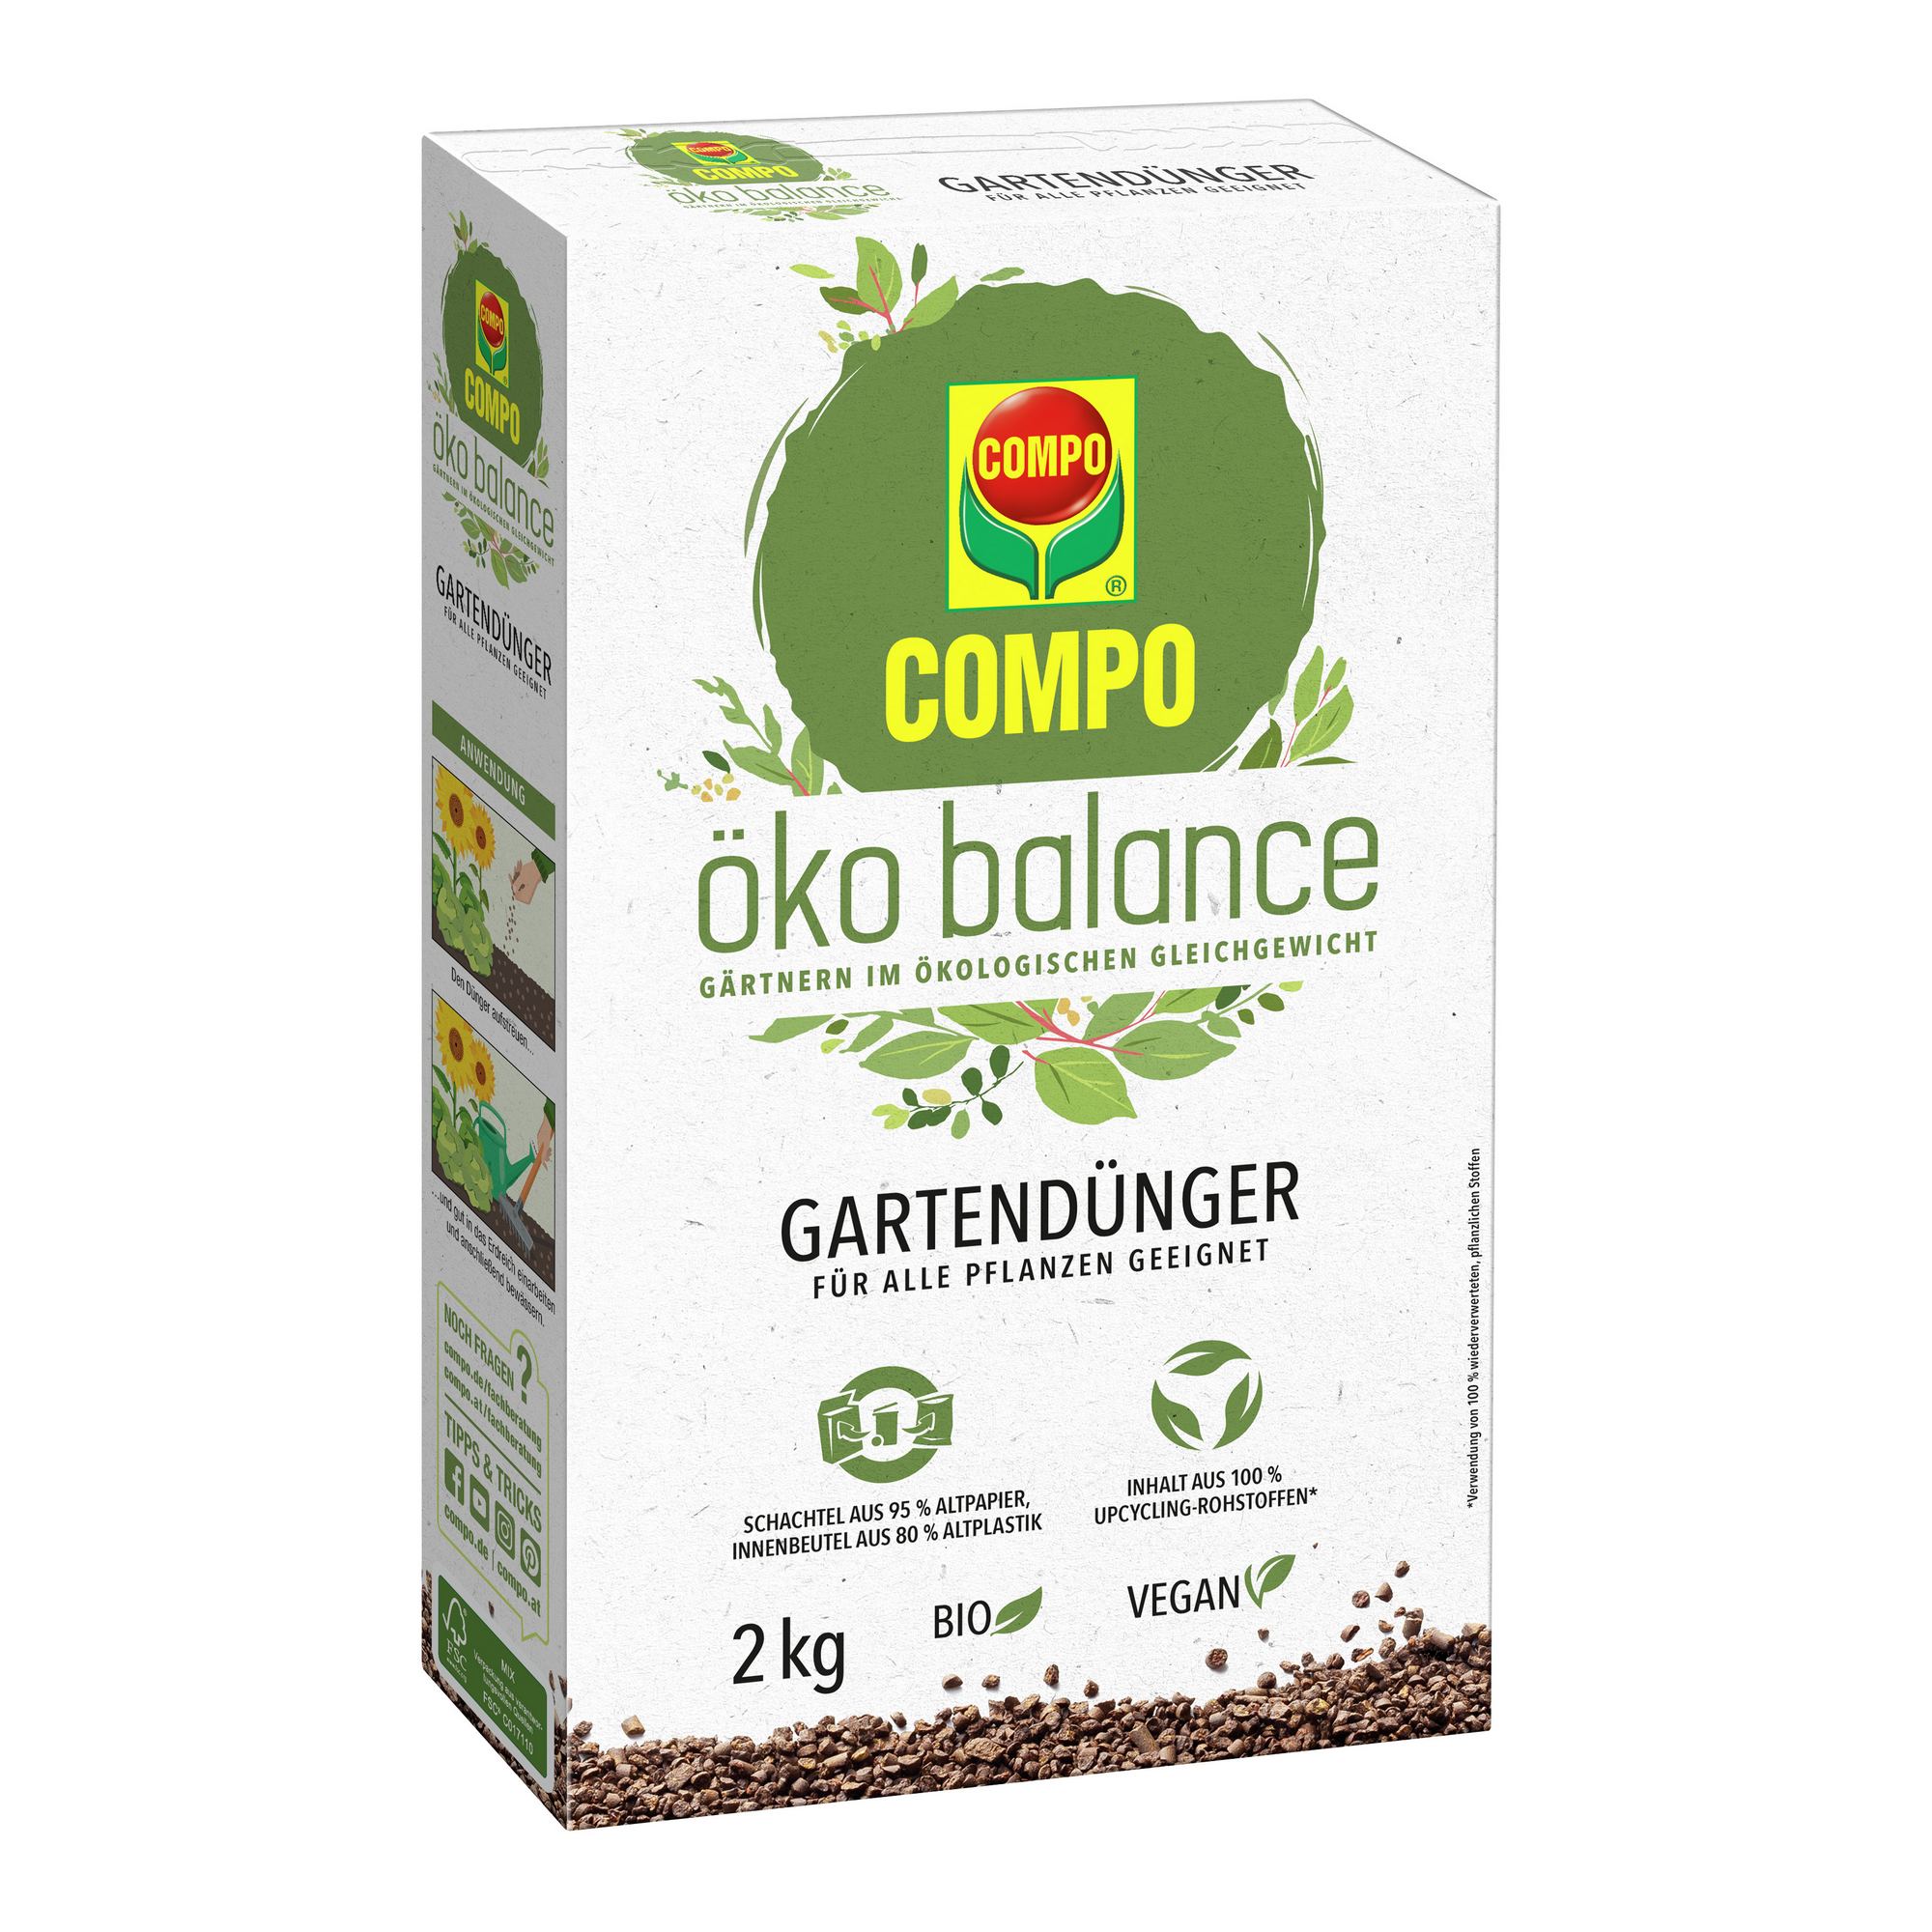 öko balance Gartendünger 2 kg + product picture